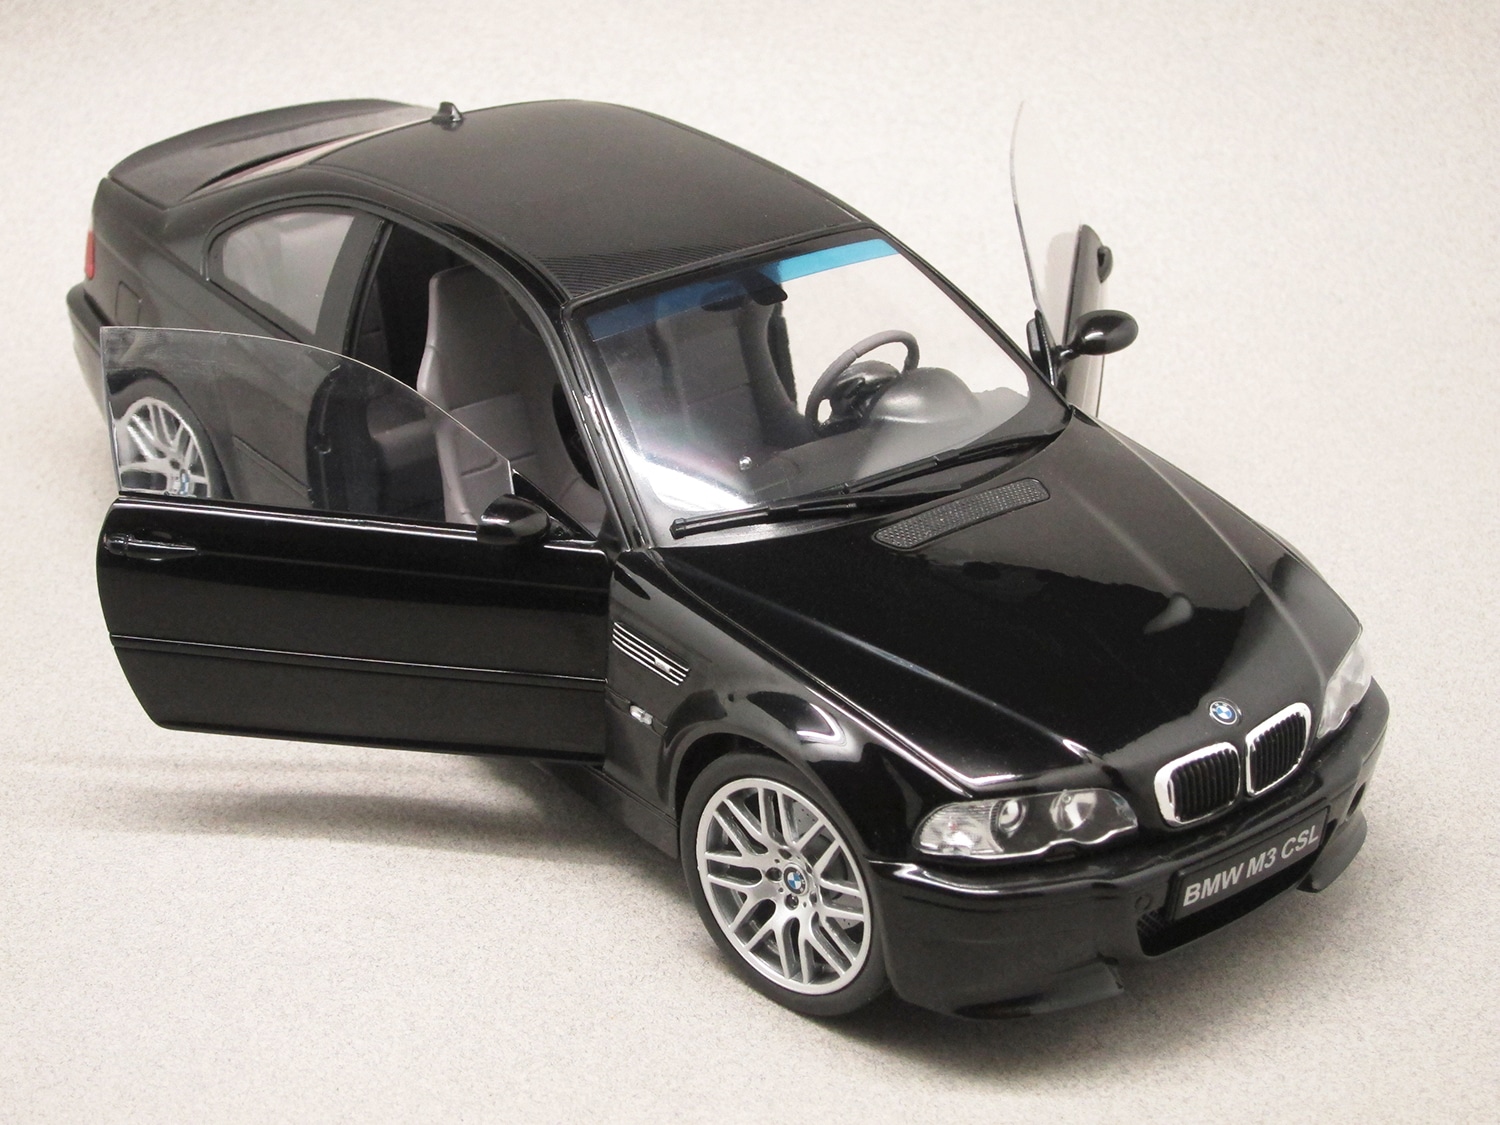 BMW M3 CSL E46 black (Solido) 1:18 - Minicarweb